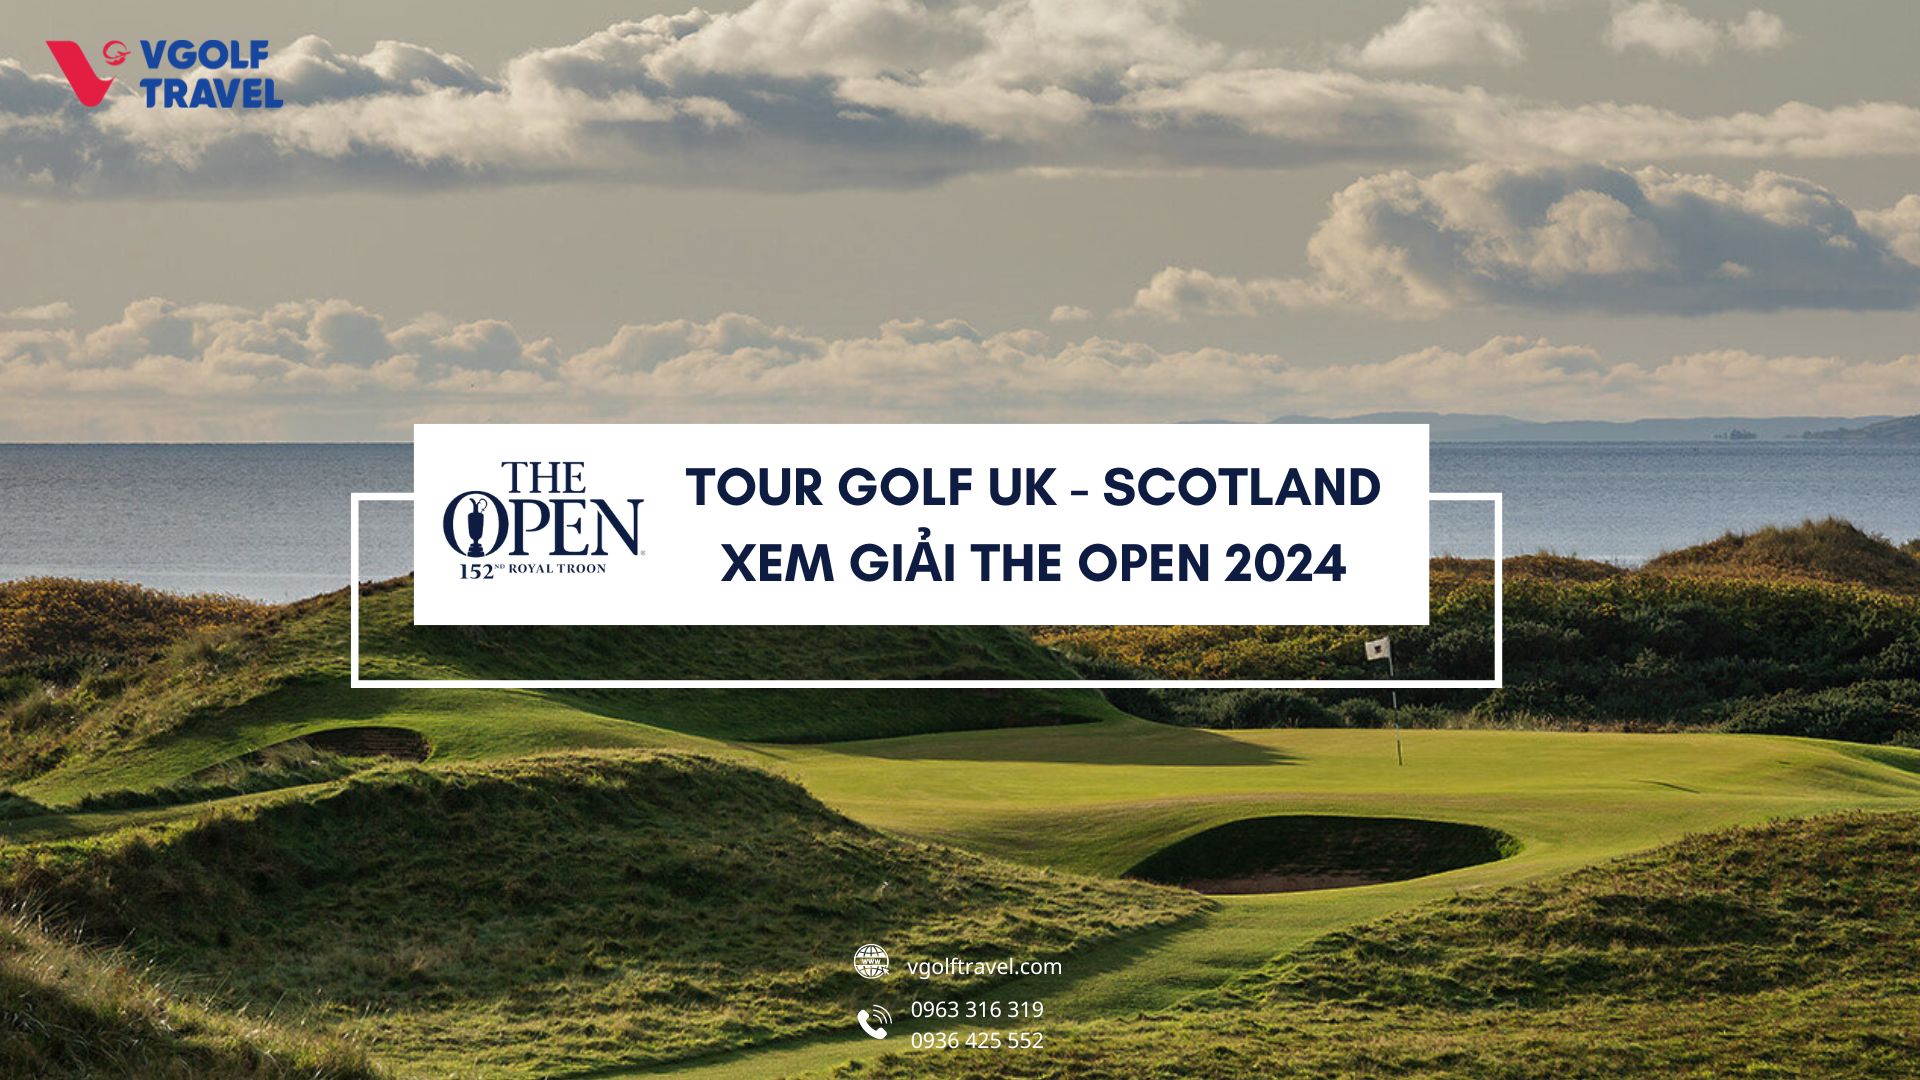 Trải nghiệm tour xem giải The Open - Du lịch golf UK - Scotland